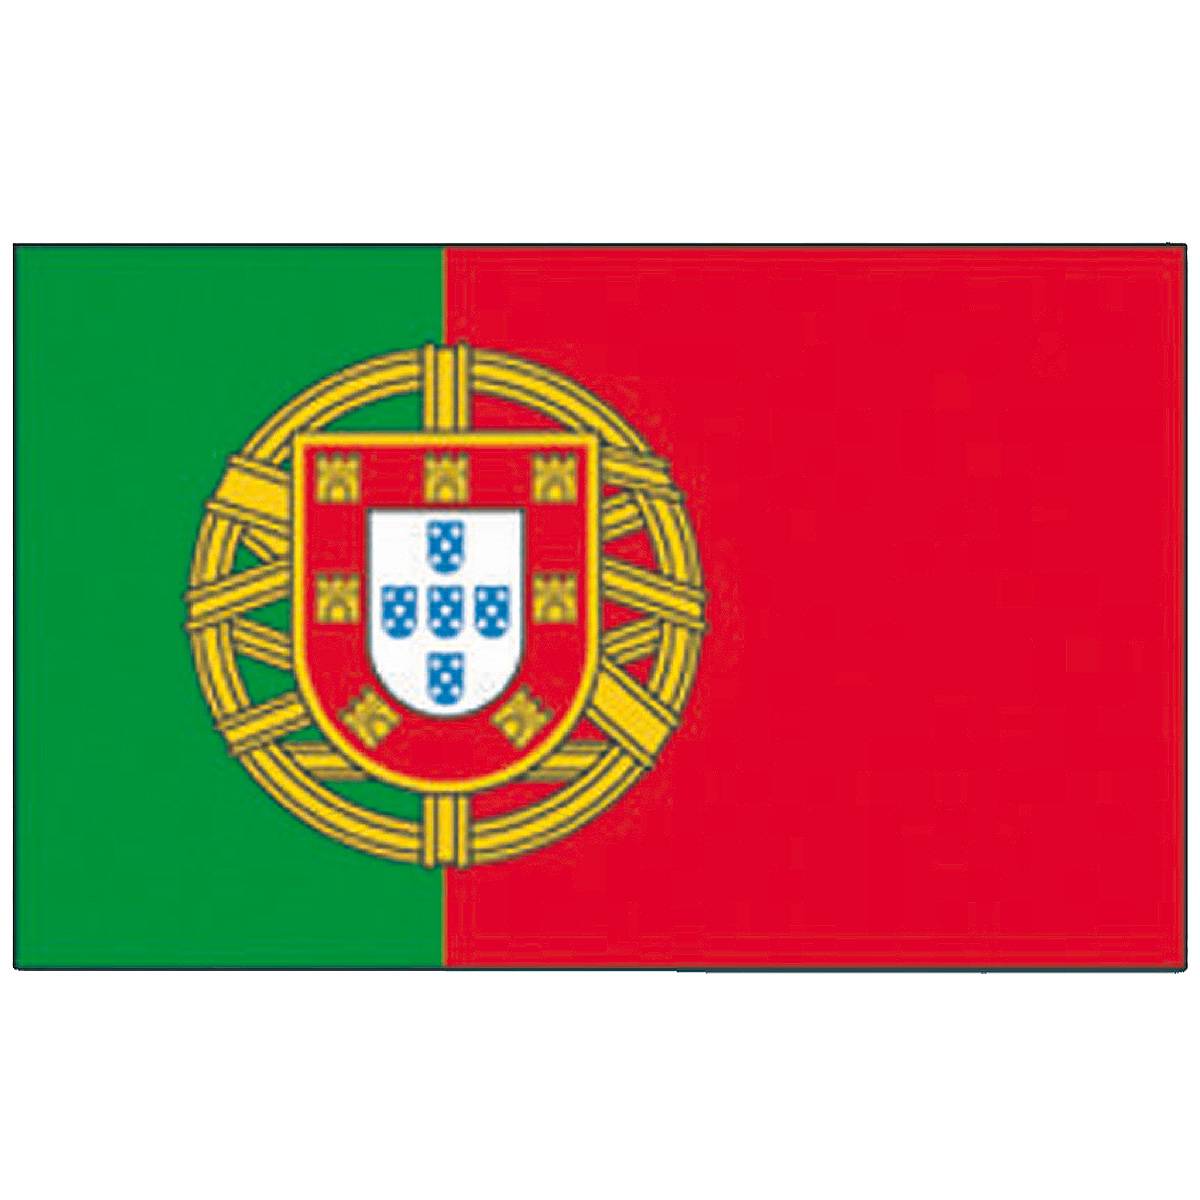 Flagge / Fahne Portugal -   Bundeswehr Shop, Armyshop, U,  5,95 €